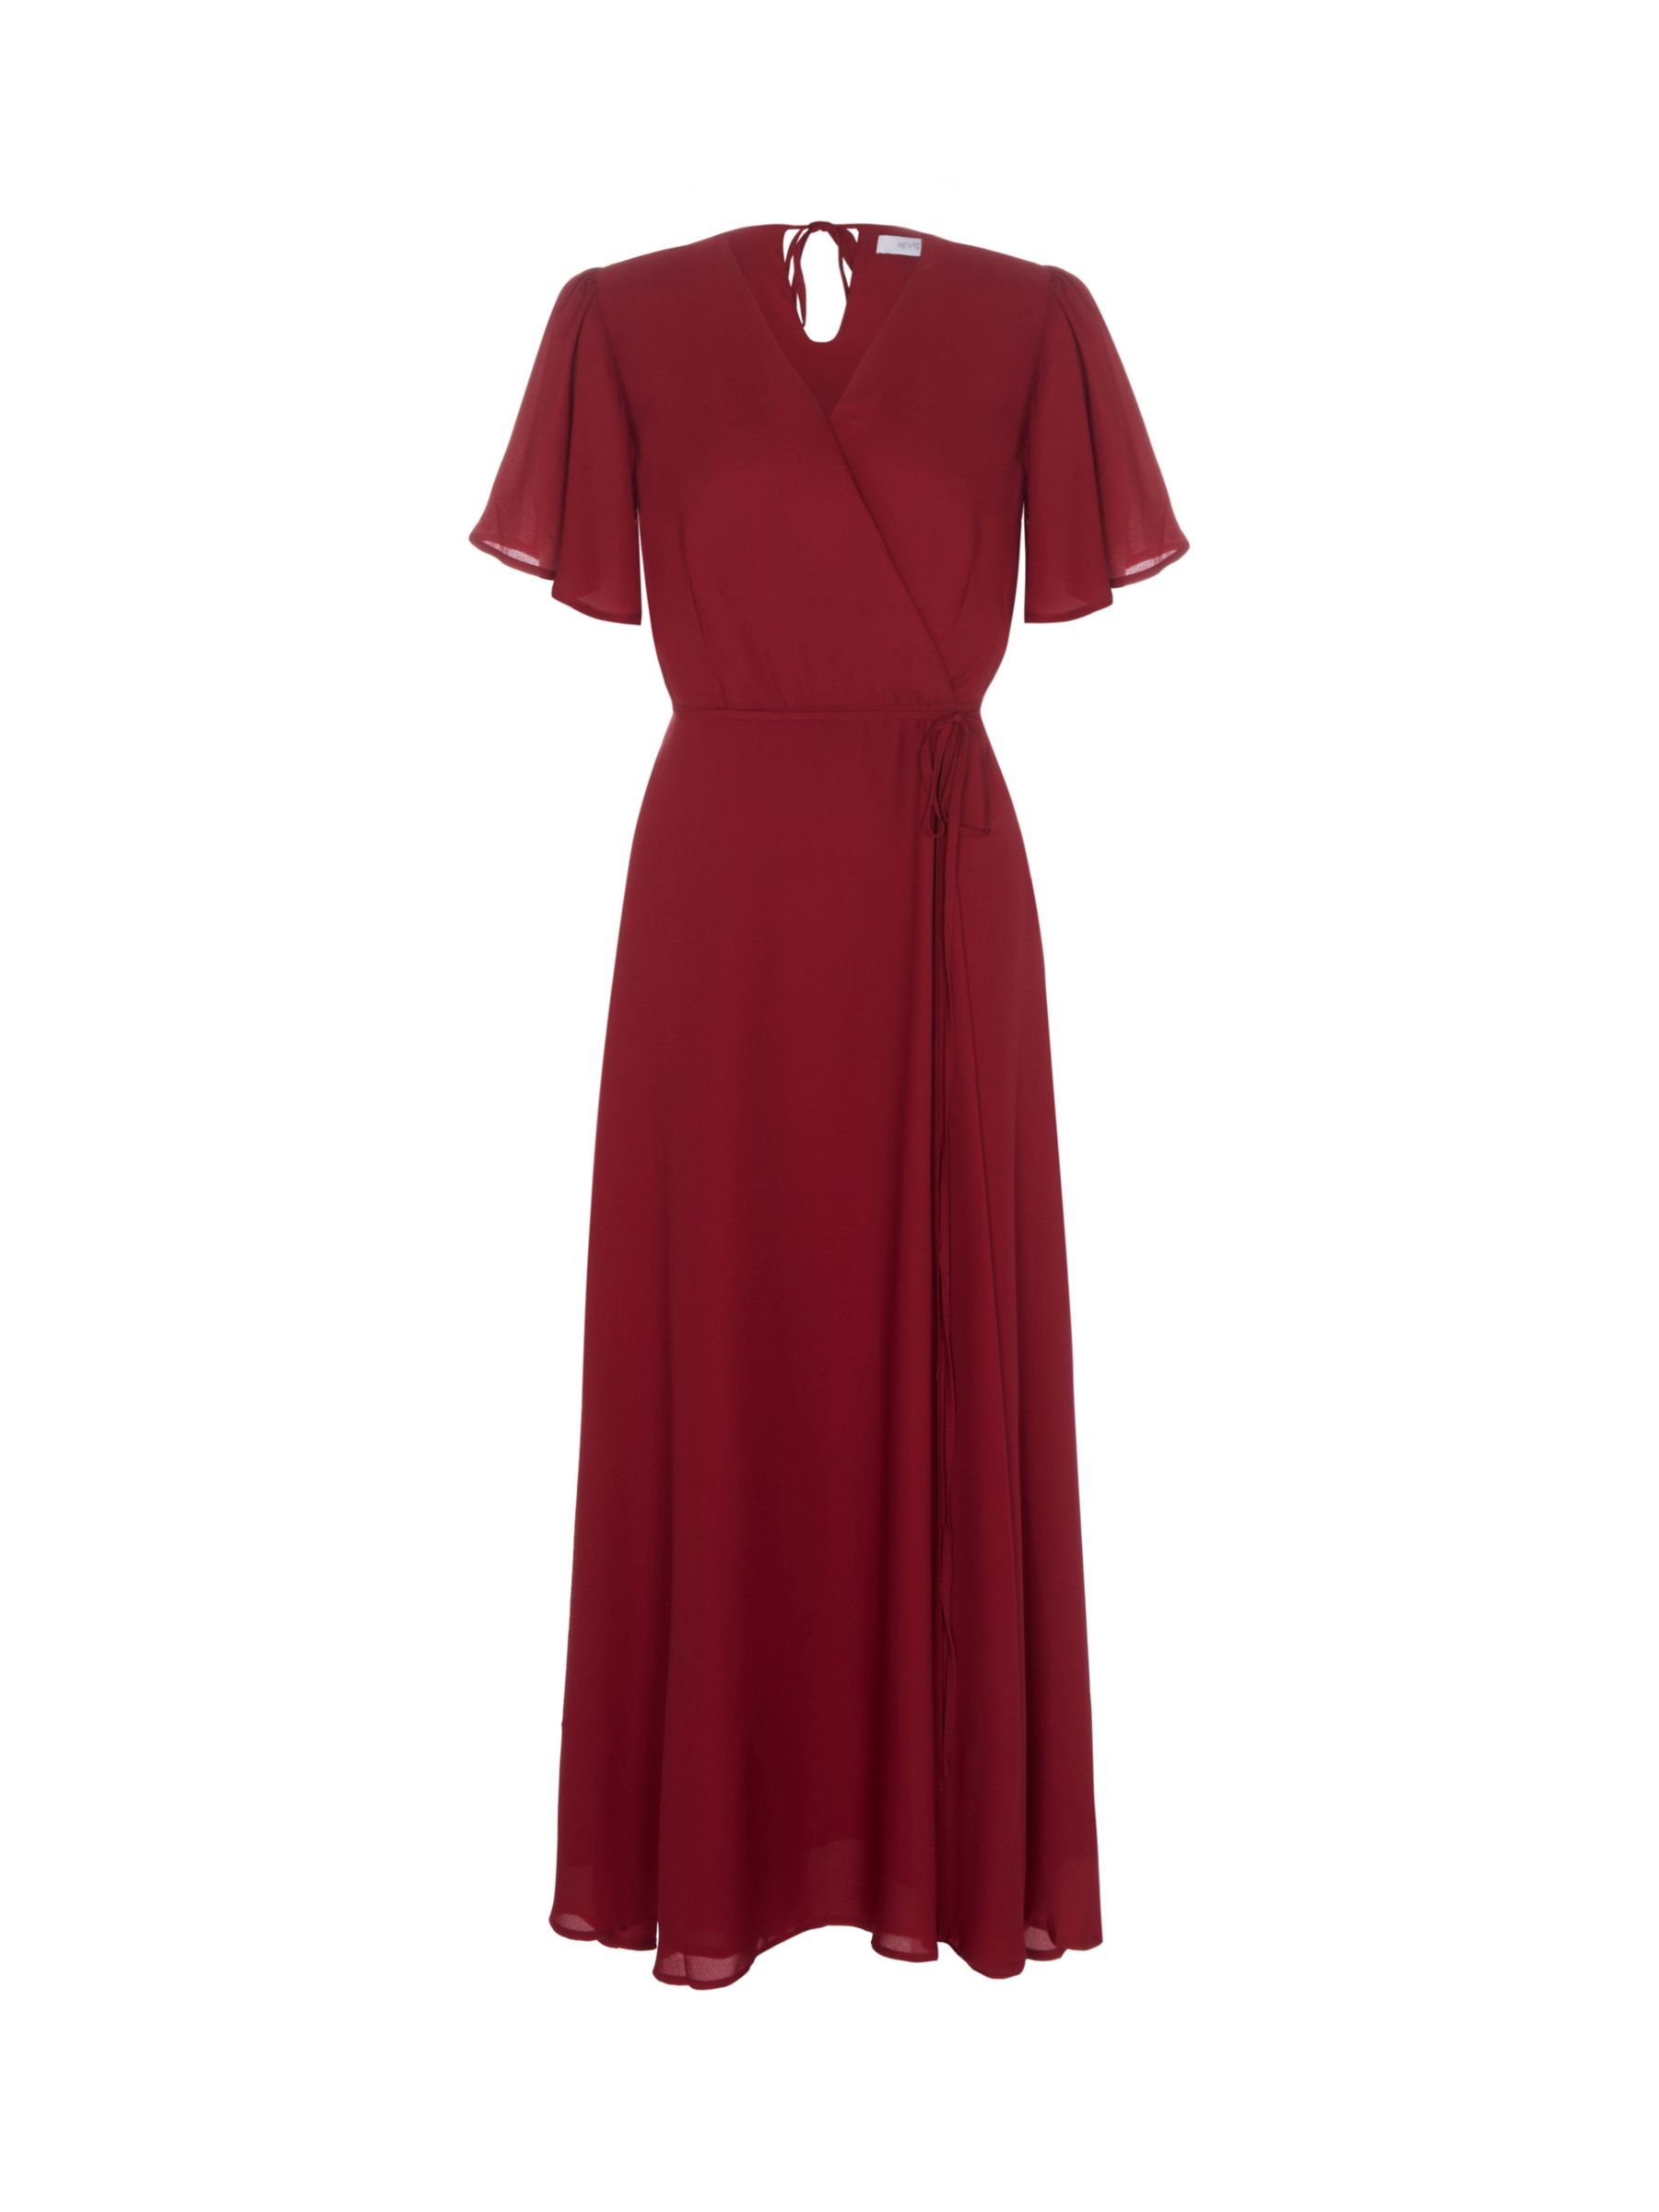 Rewritten Florence V-Neck Wrap Bridesmaid Dress, Chianti, XS